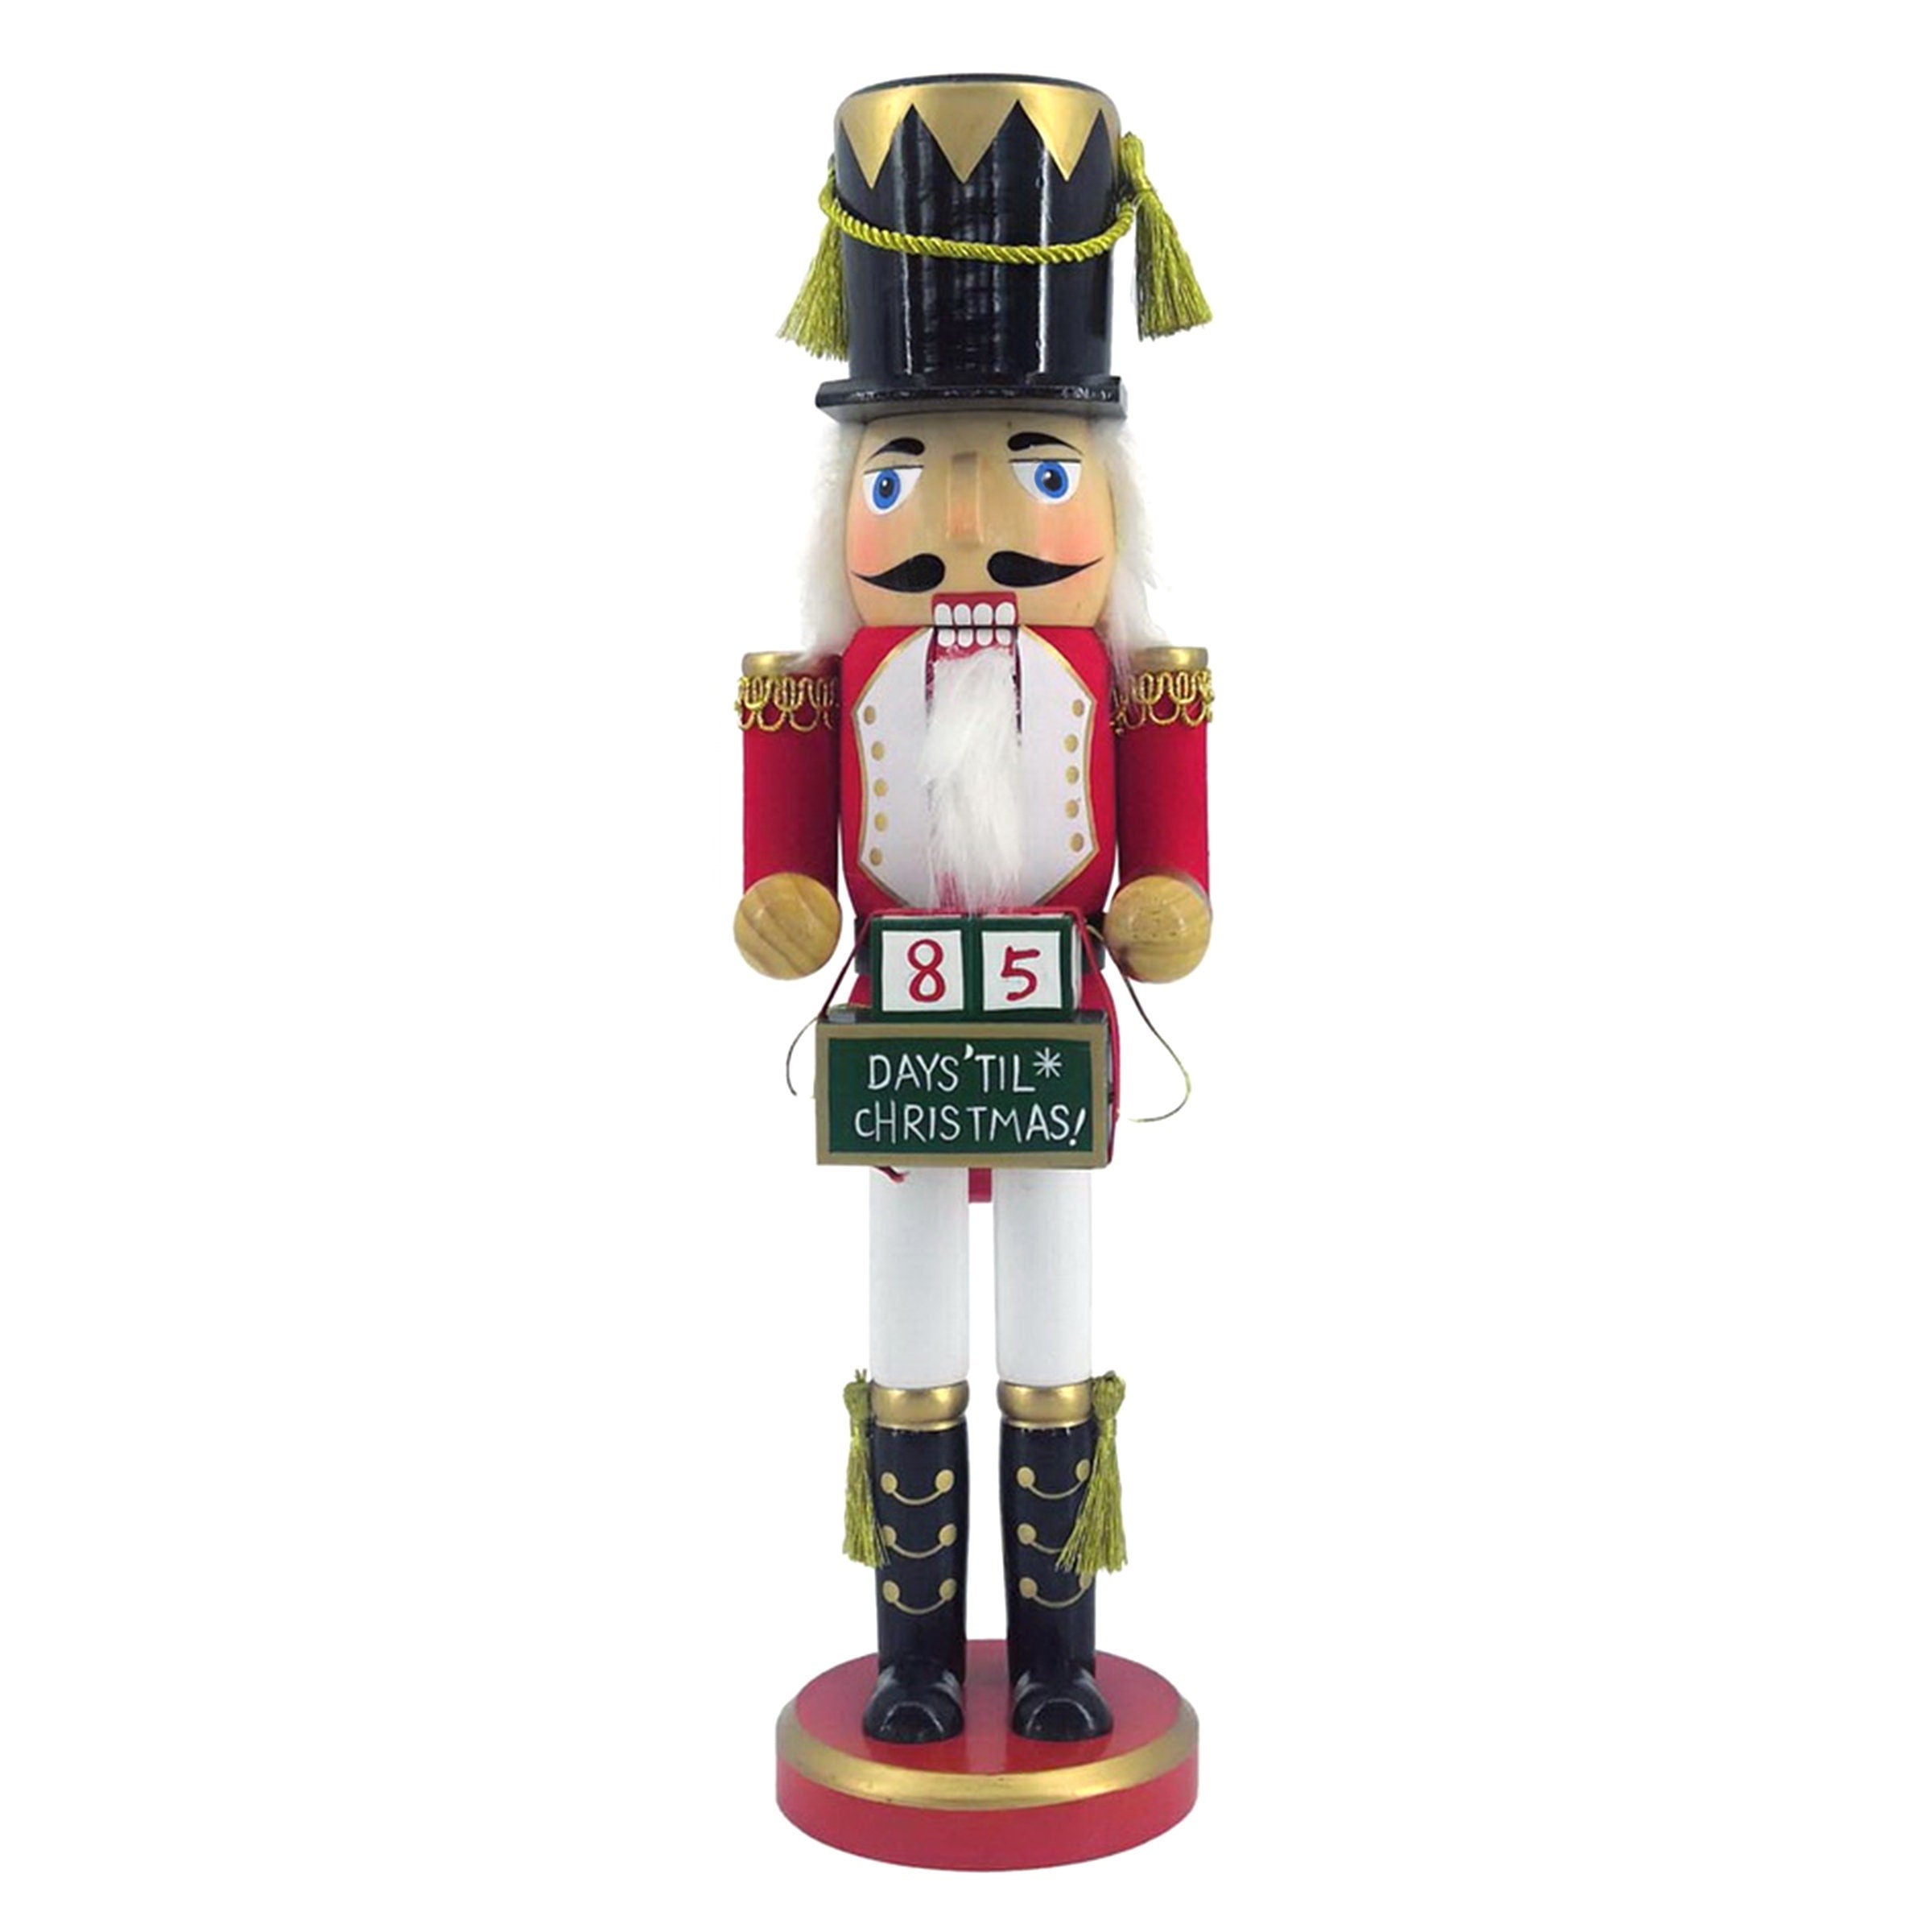 14-inch-Wooden-Nutcrackers-(Advent-Calendar)Christmas-Decoration-Figures-Nutcrackers